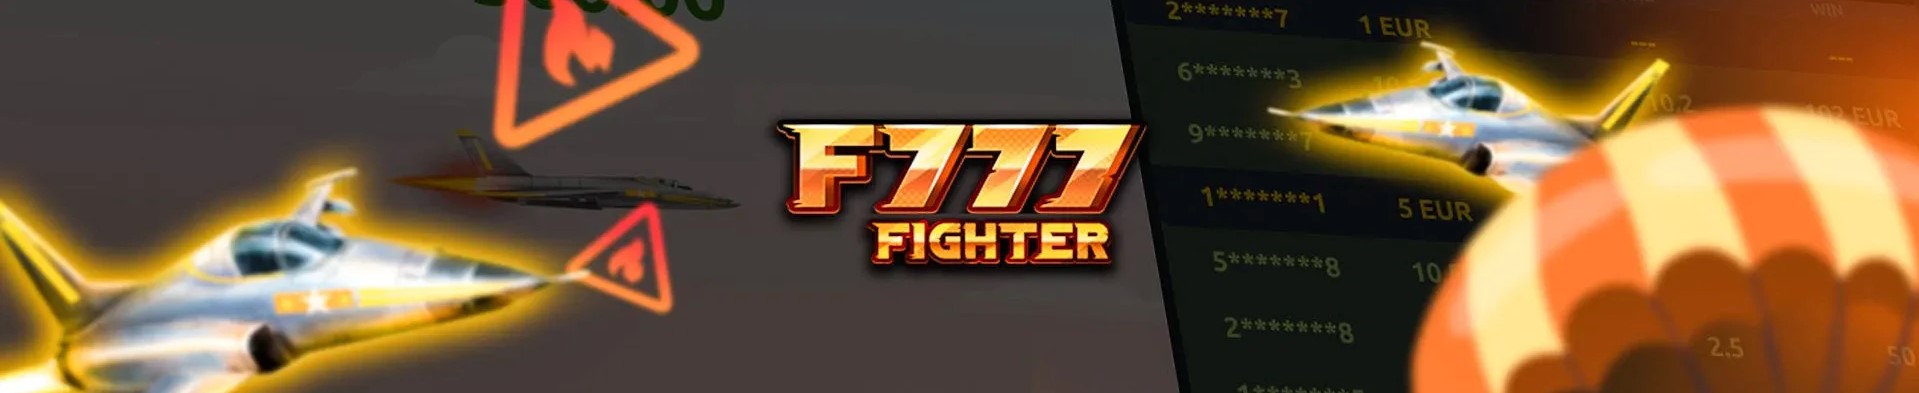 F777 fighter गेम।